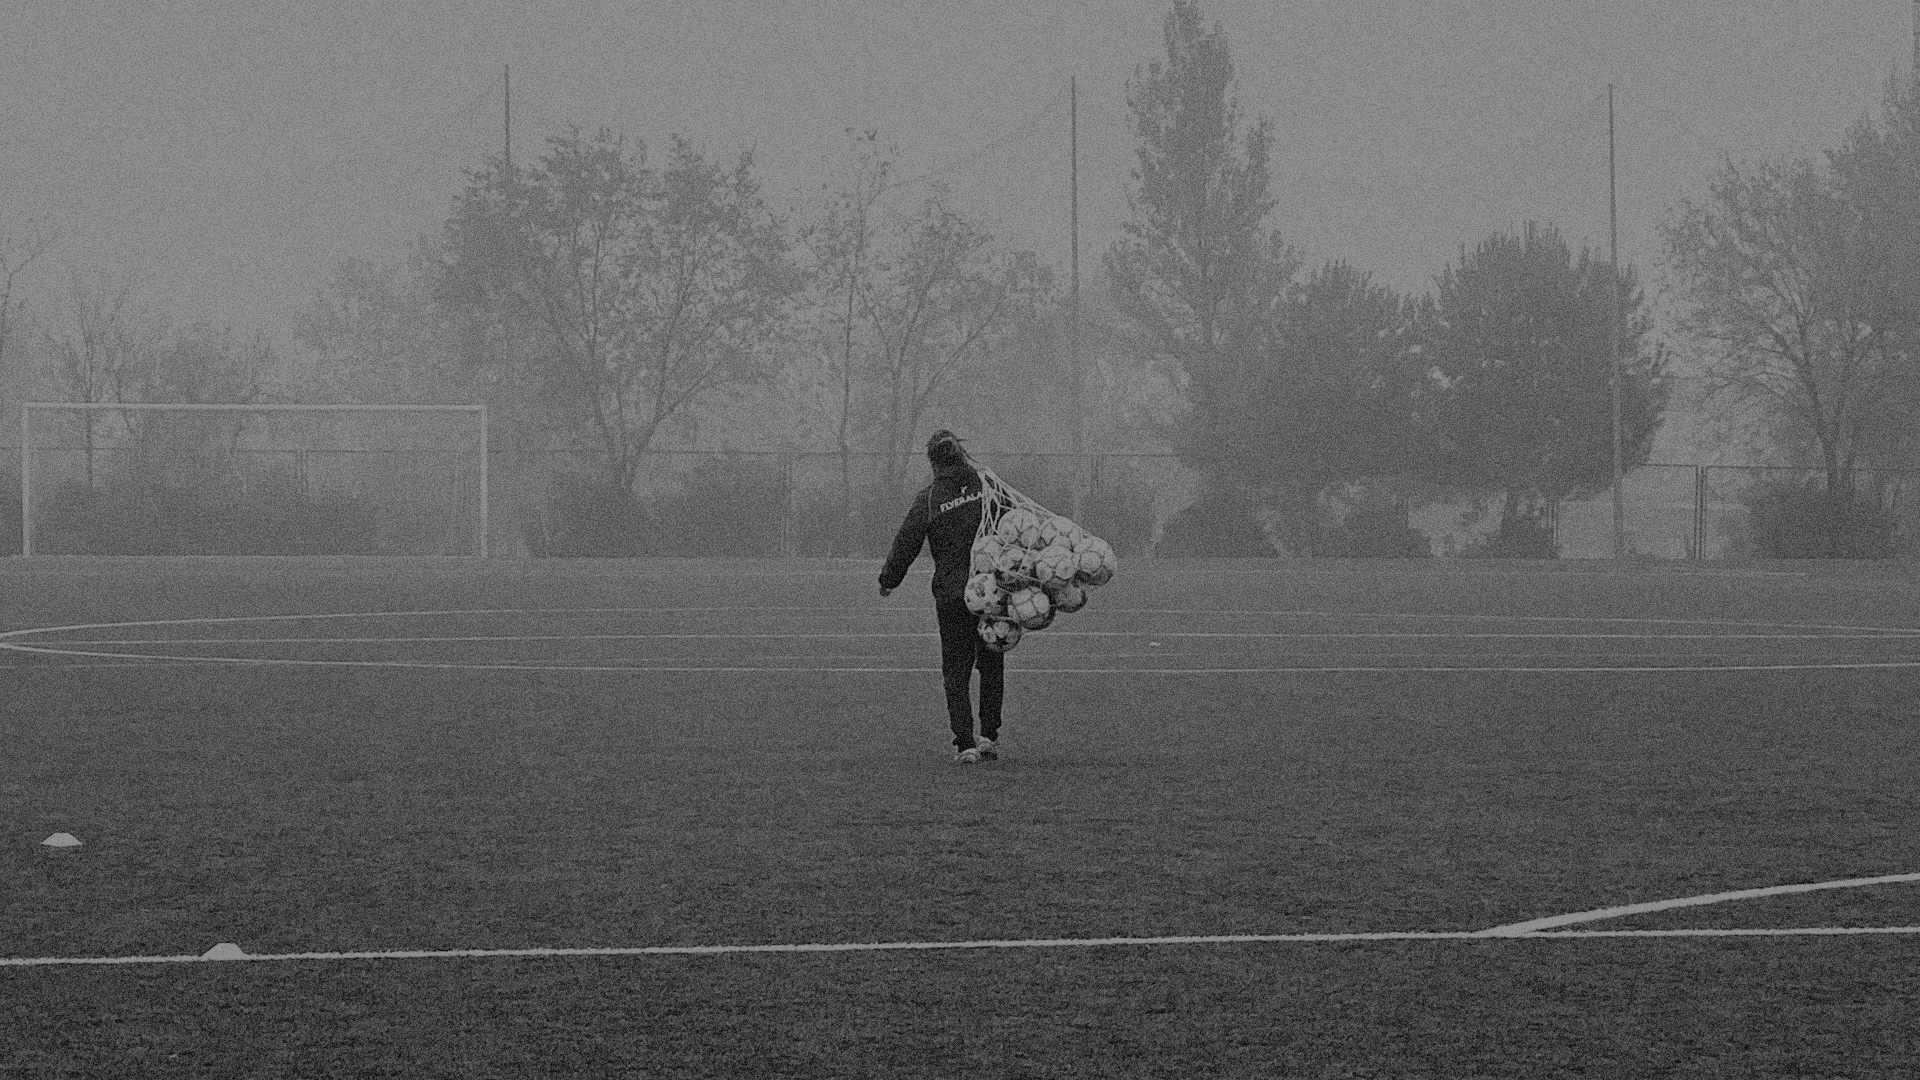 Soccer coach carrying a bag of soccer balls